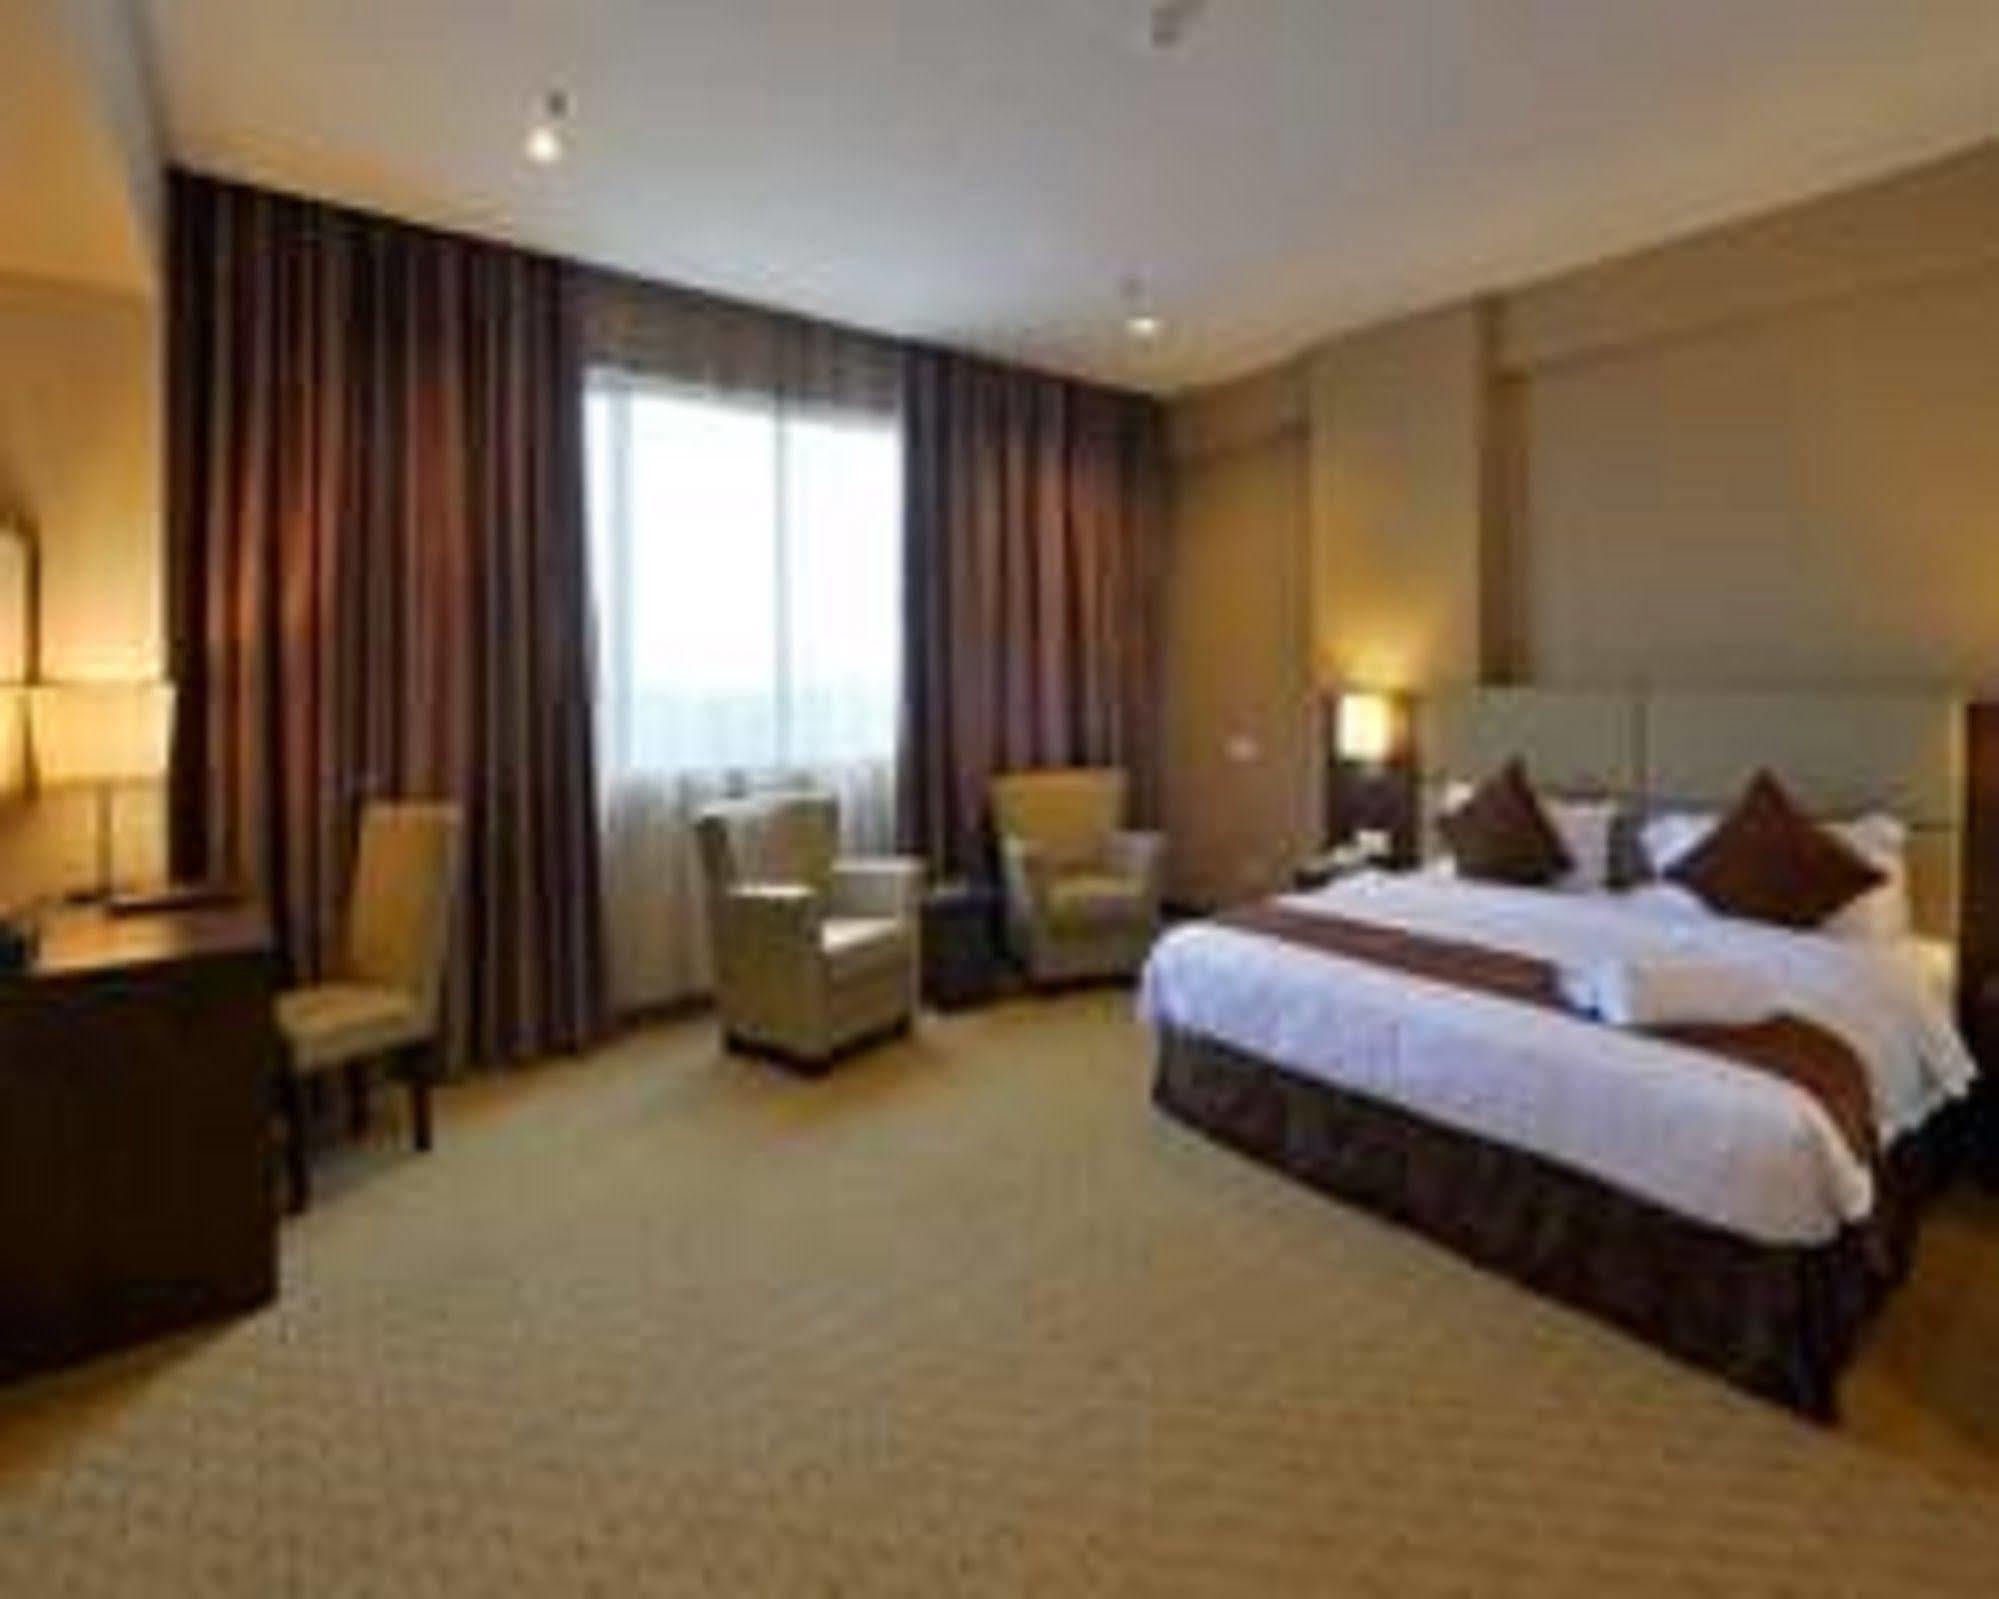 Lintas View Hotel Kota Kinabalu Exterior photo